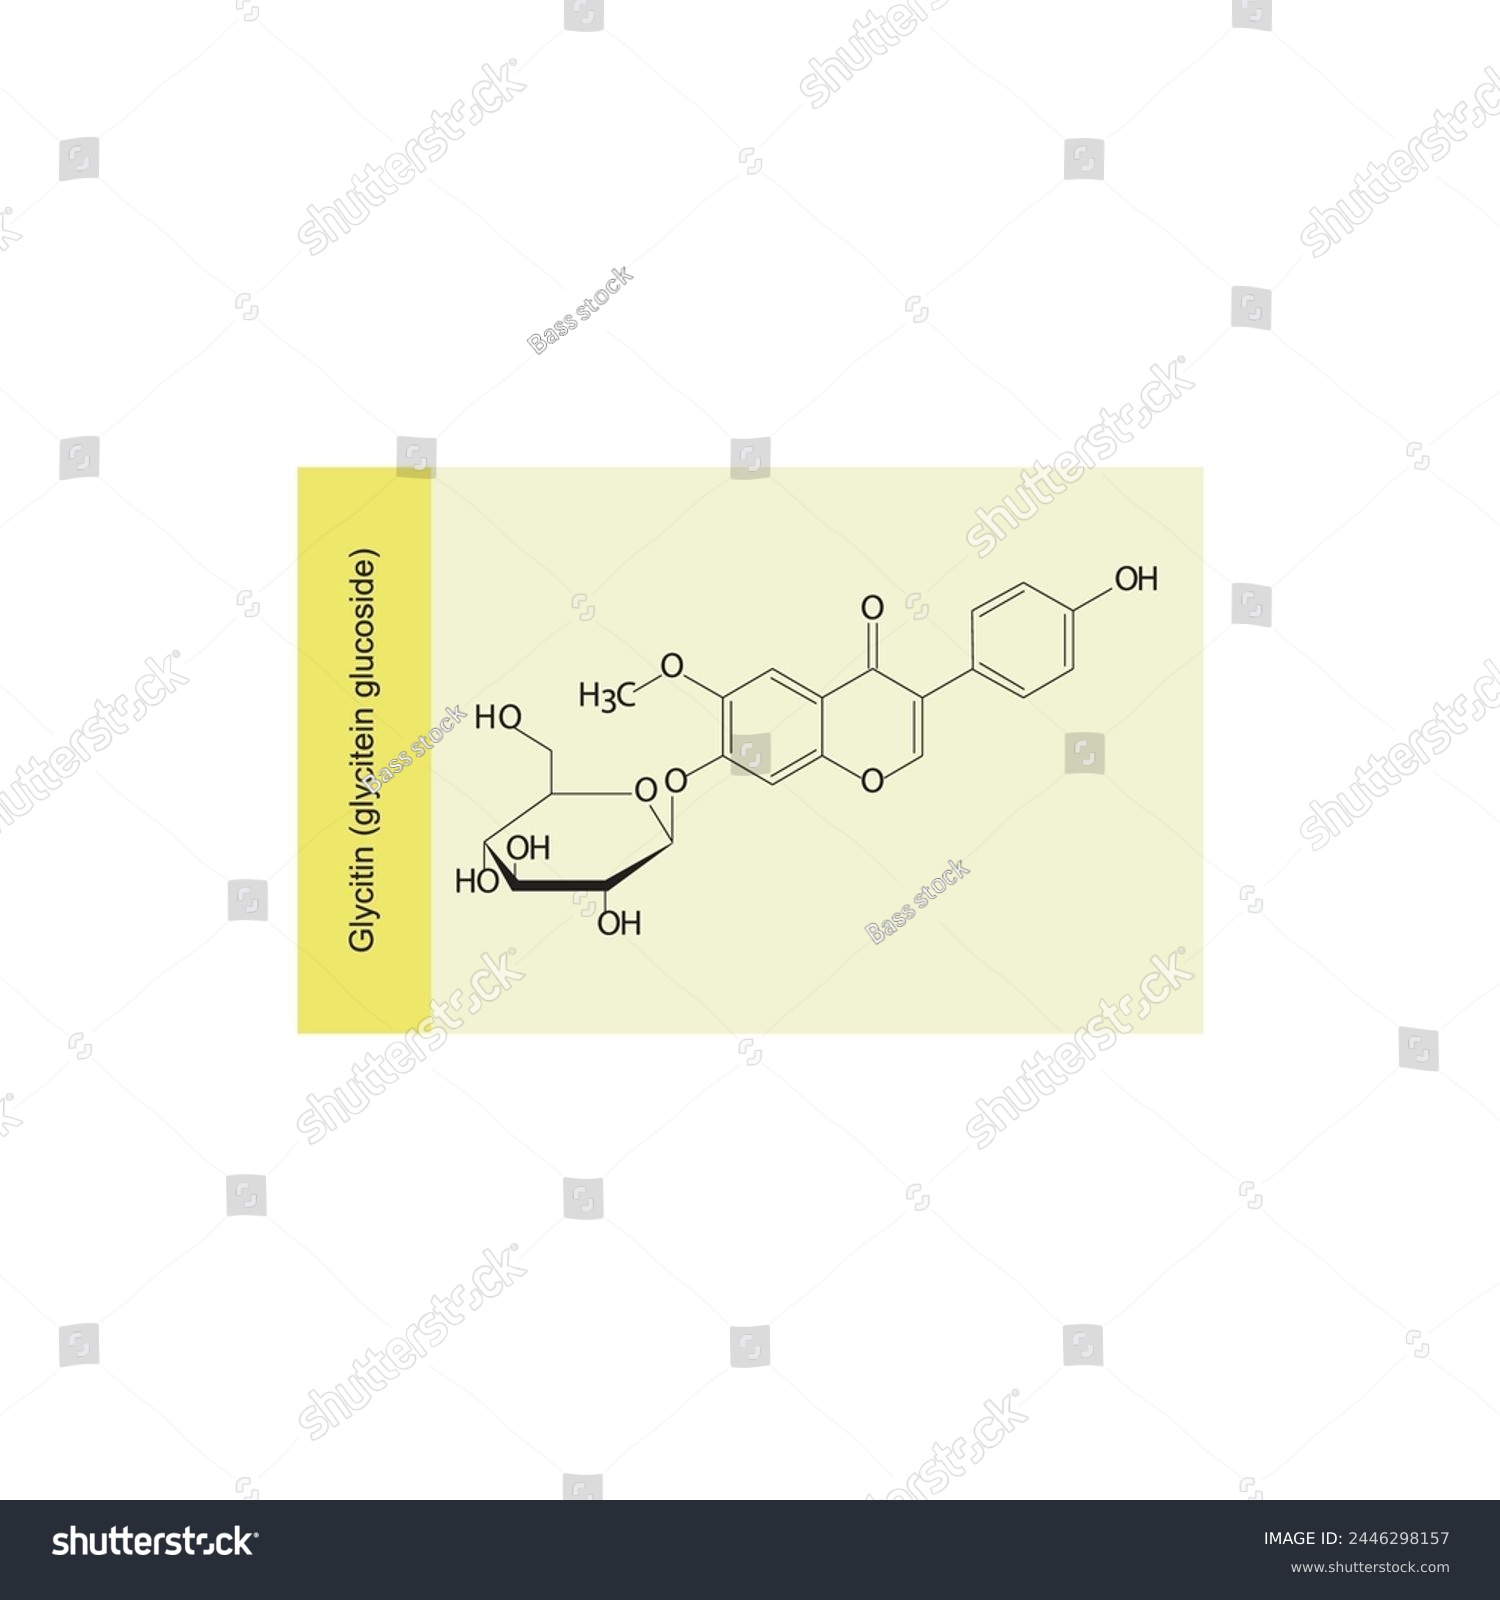 SVG of Glycitin (glycitein glucoside) skeletal structure diagram.Isoflavanone compound molecule scientific illustration on yellow background. svg